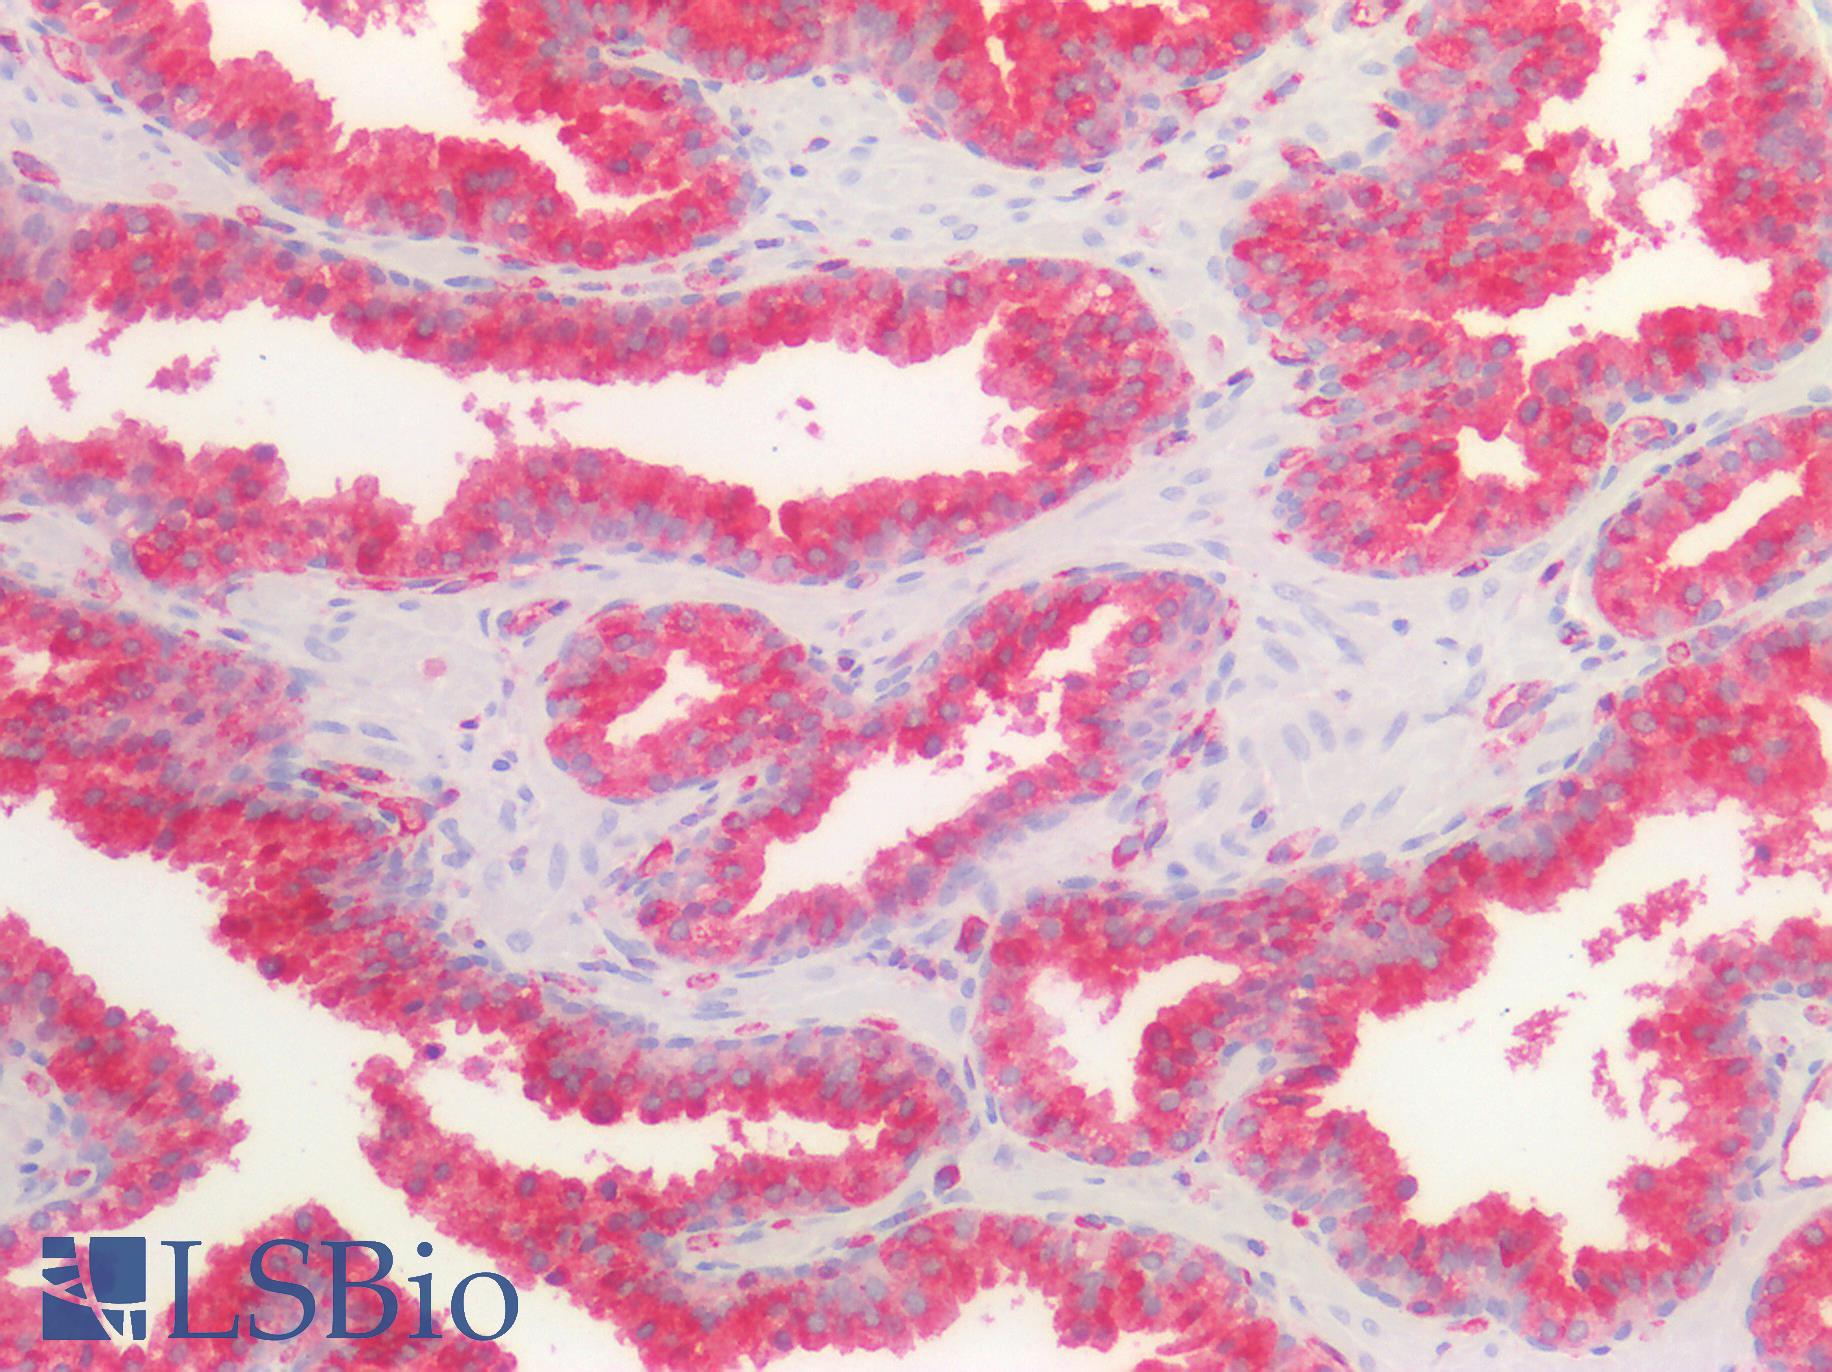 B2M / Beta 2 Microglobulin Antibody - Human Prostate: Formalin-Fixed, Paraffin-Embedded (FFPE)